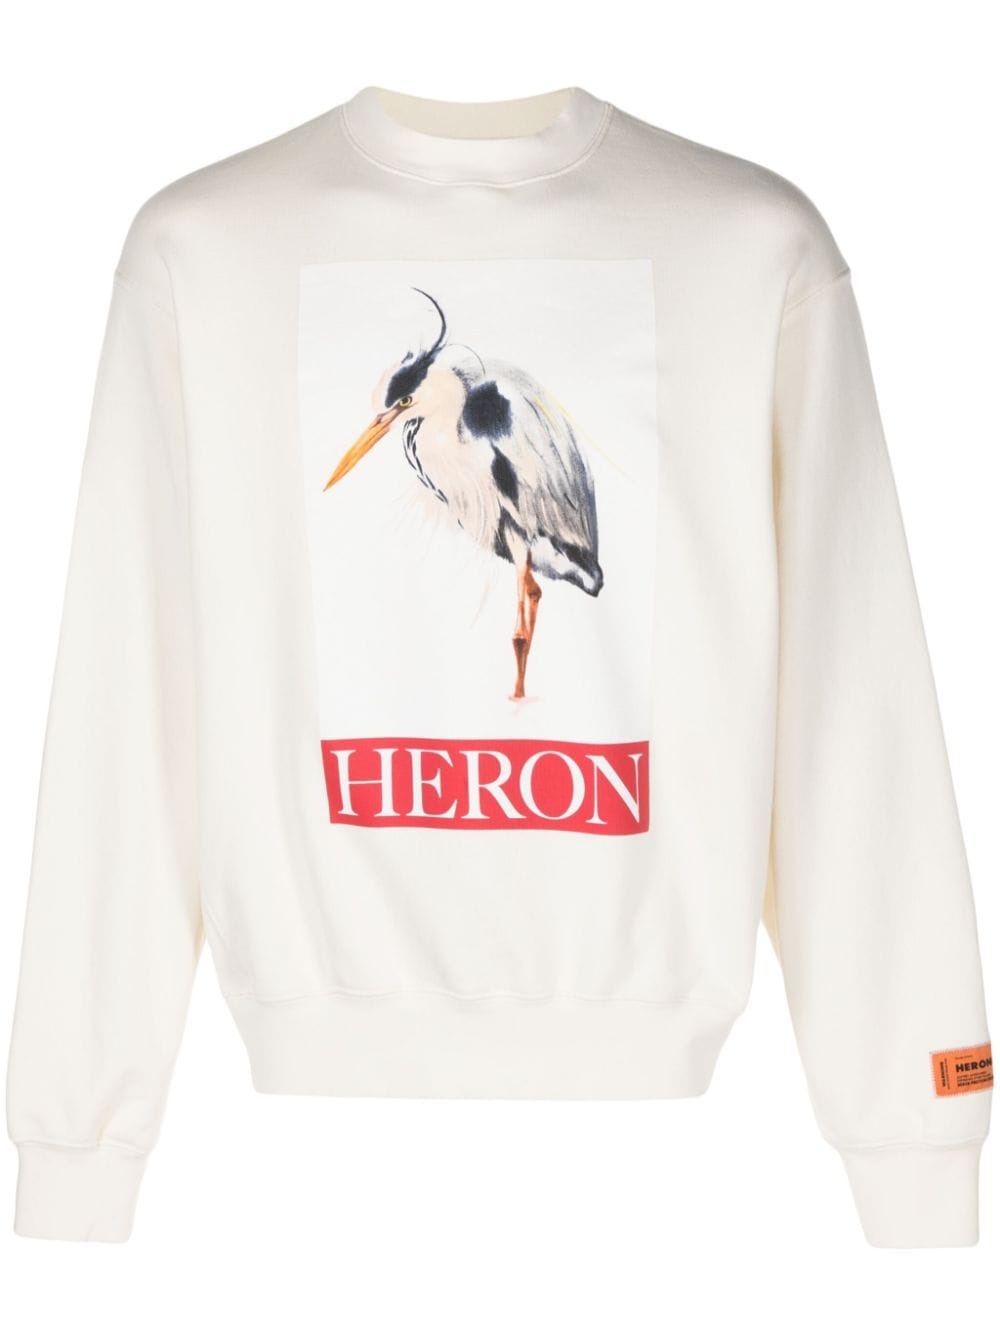 Heron Bird Painted sweatshirt - 1